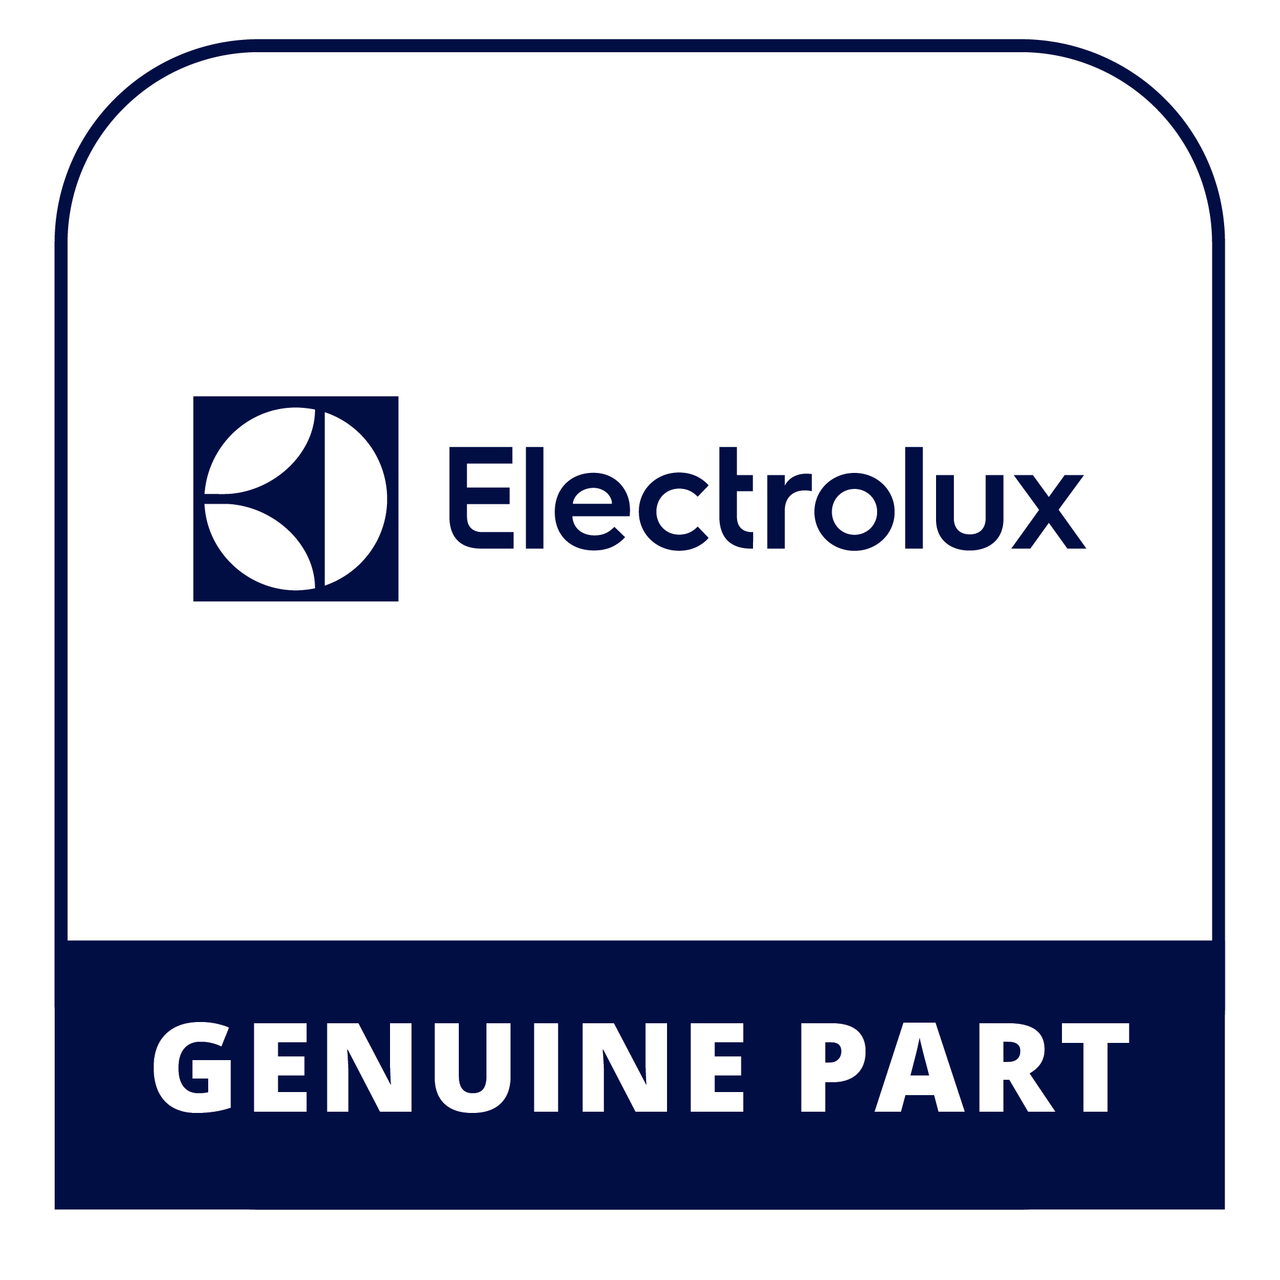 Frigidaire - Electrolux 5304515819 Capacitor - Genuine Electrolux Part